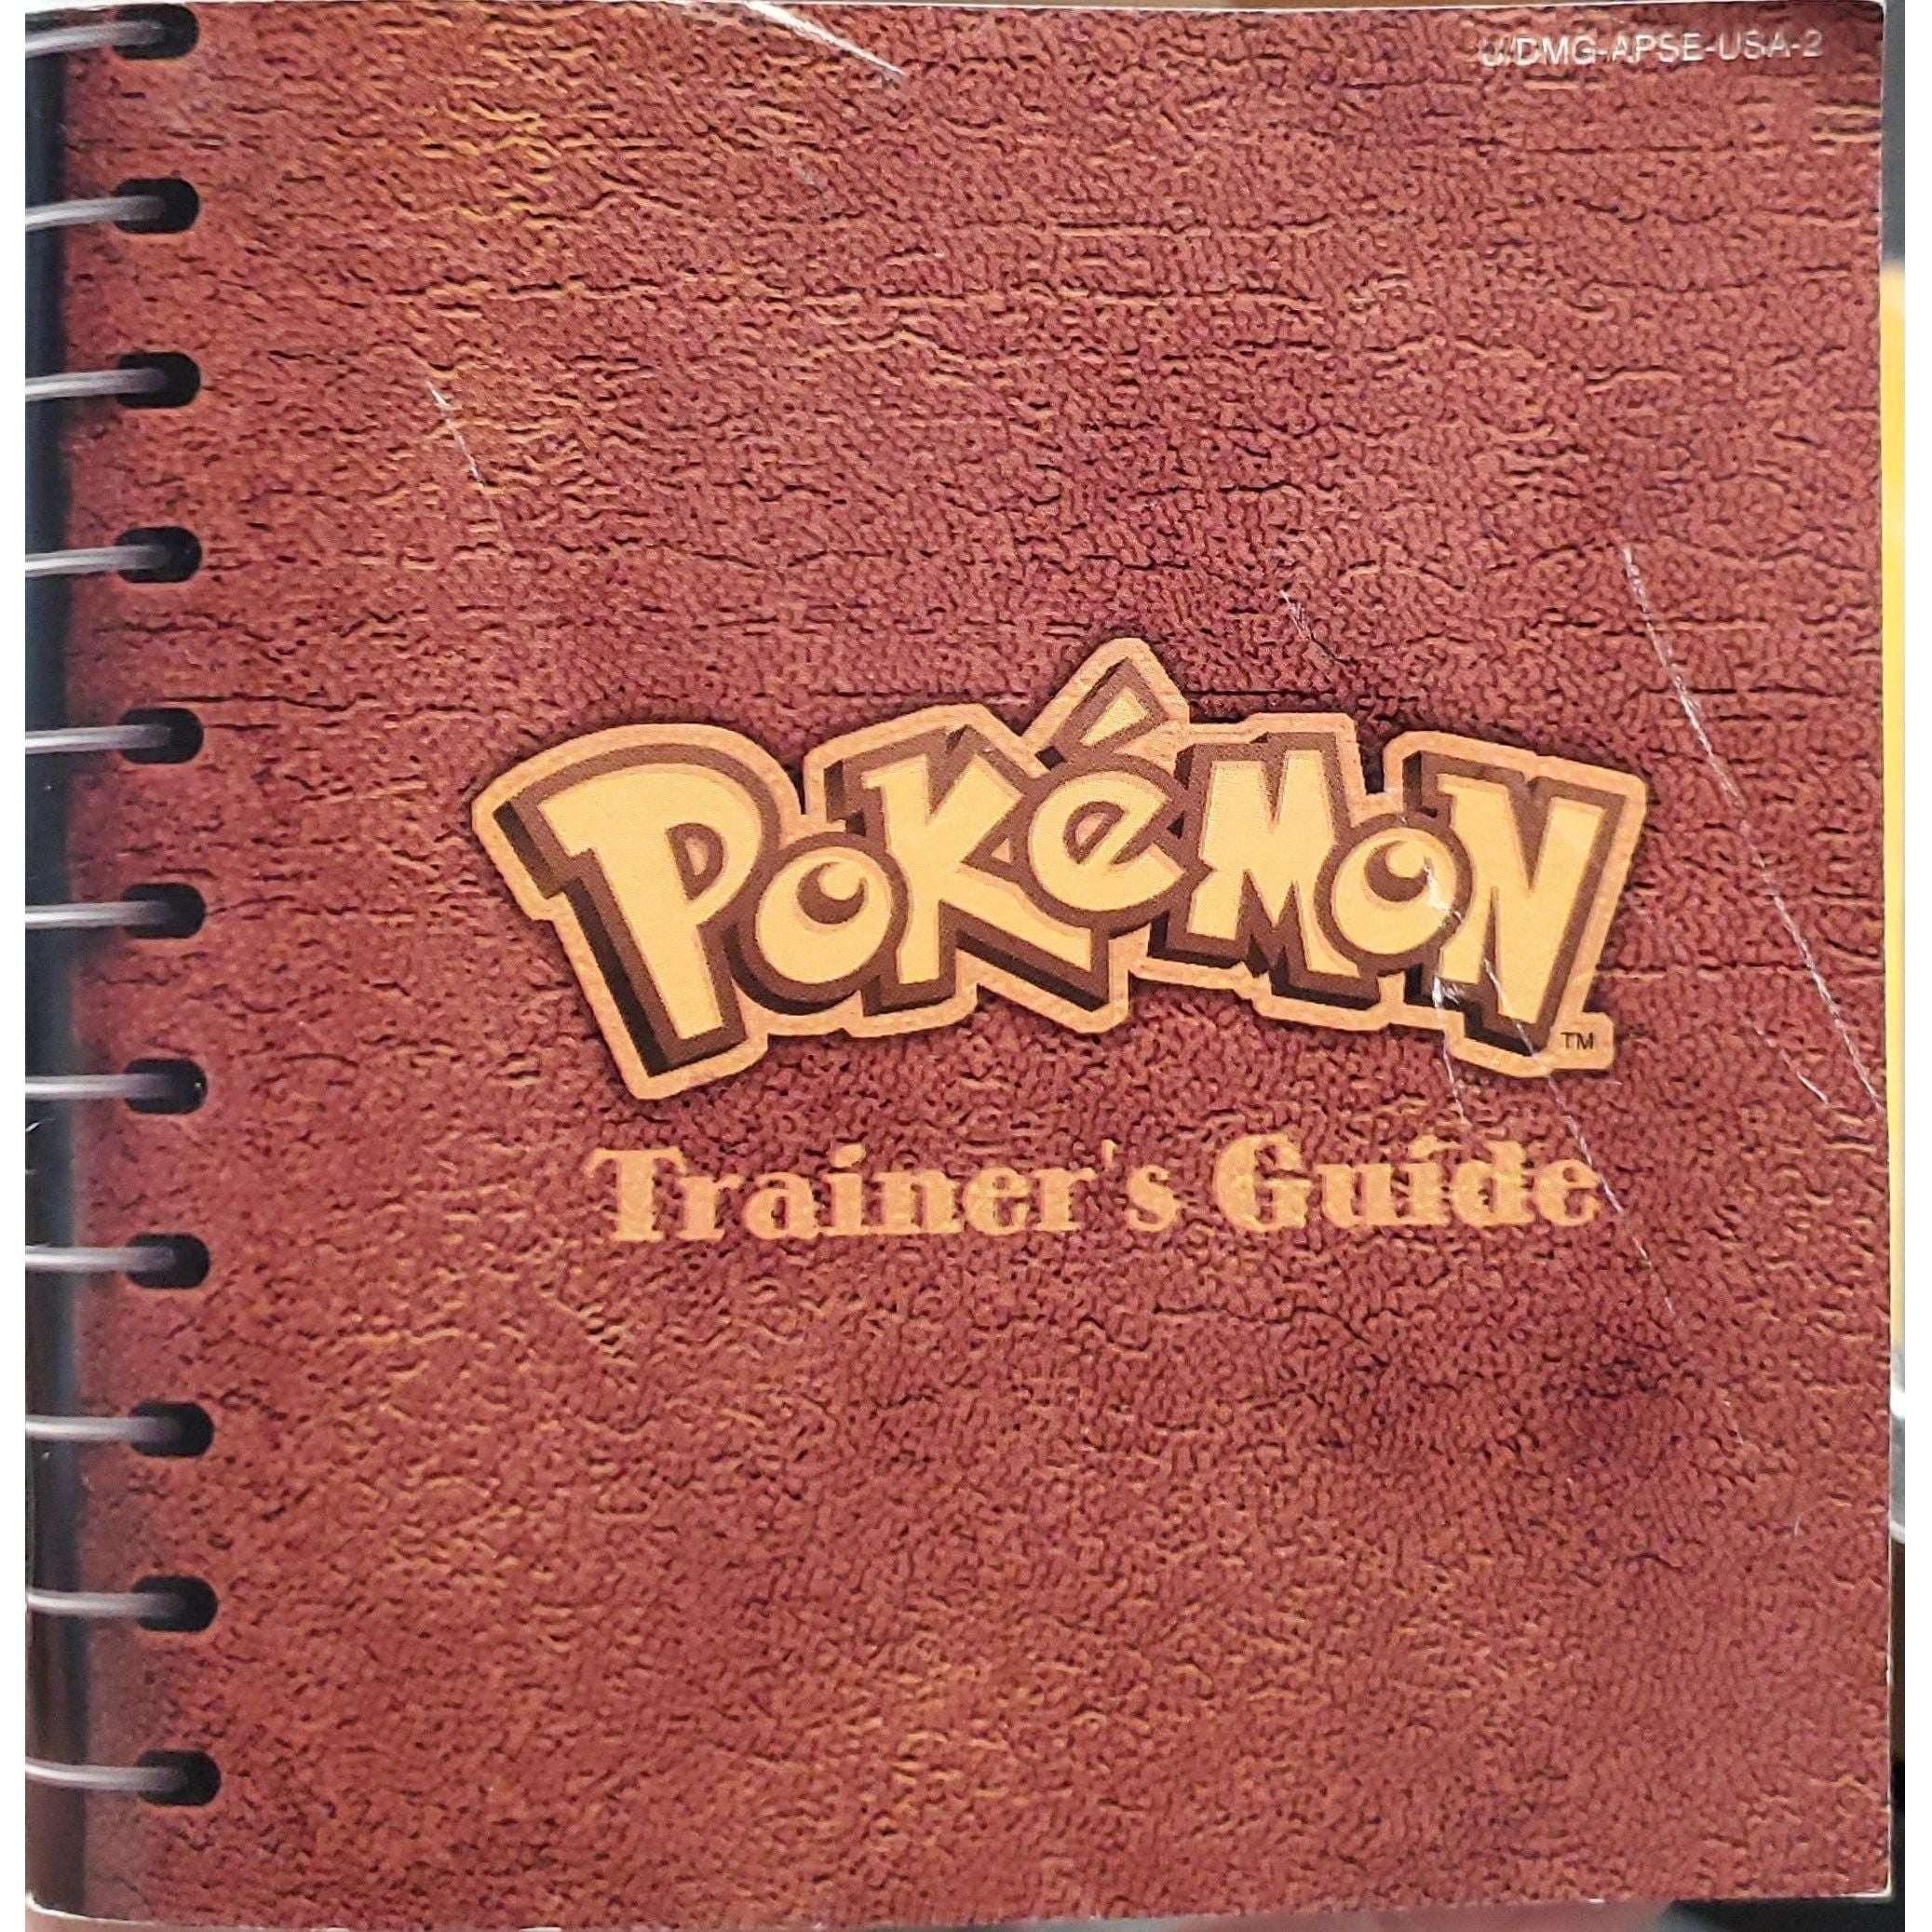 GB - Pokemon Yellow (Manual)